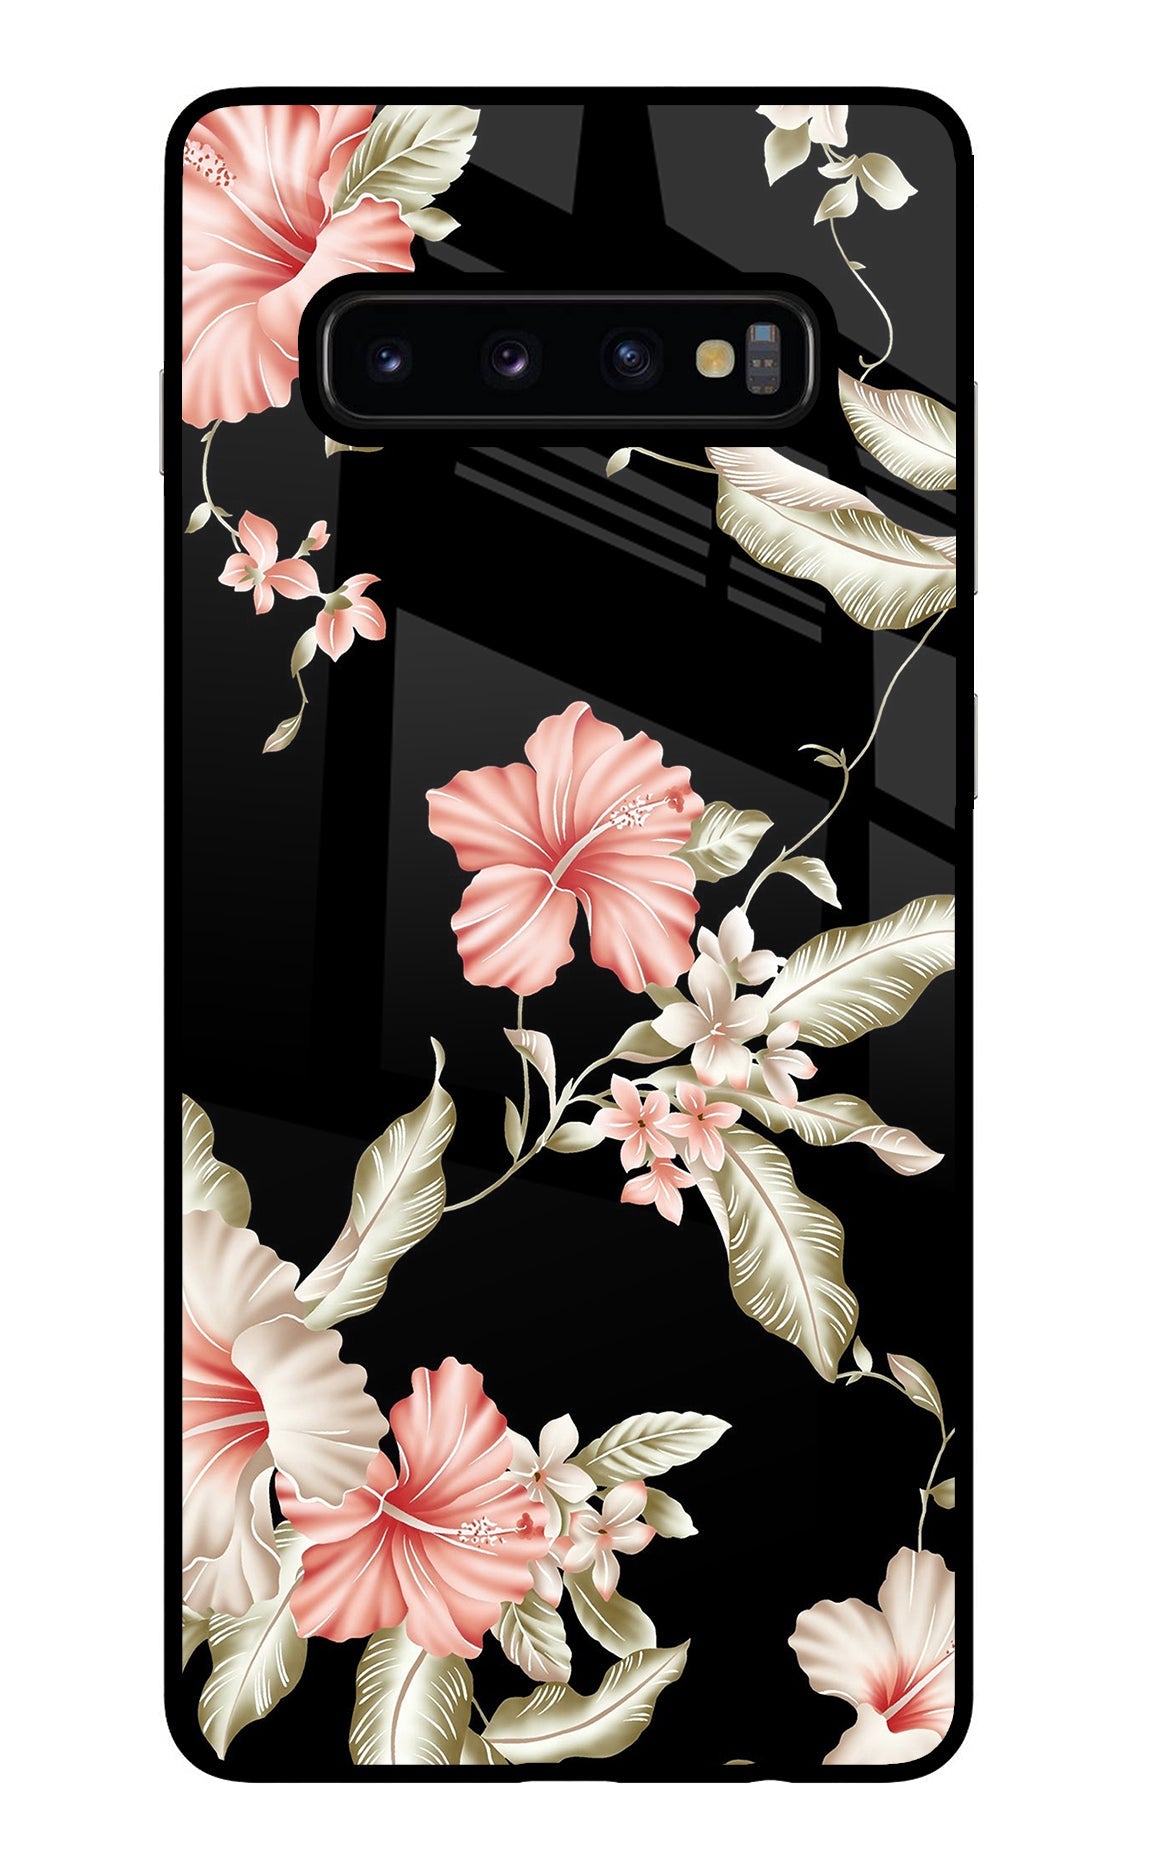 Flowers Samsung S10 Plus Glass Case